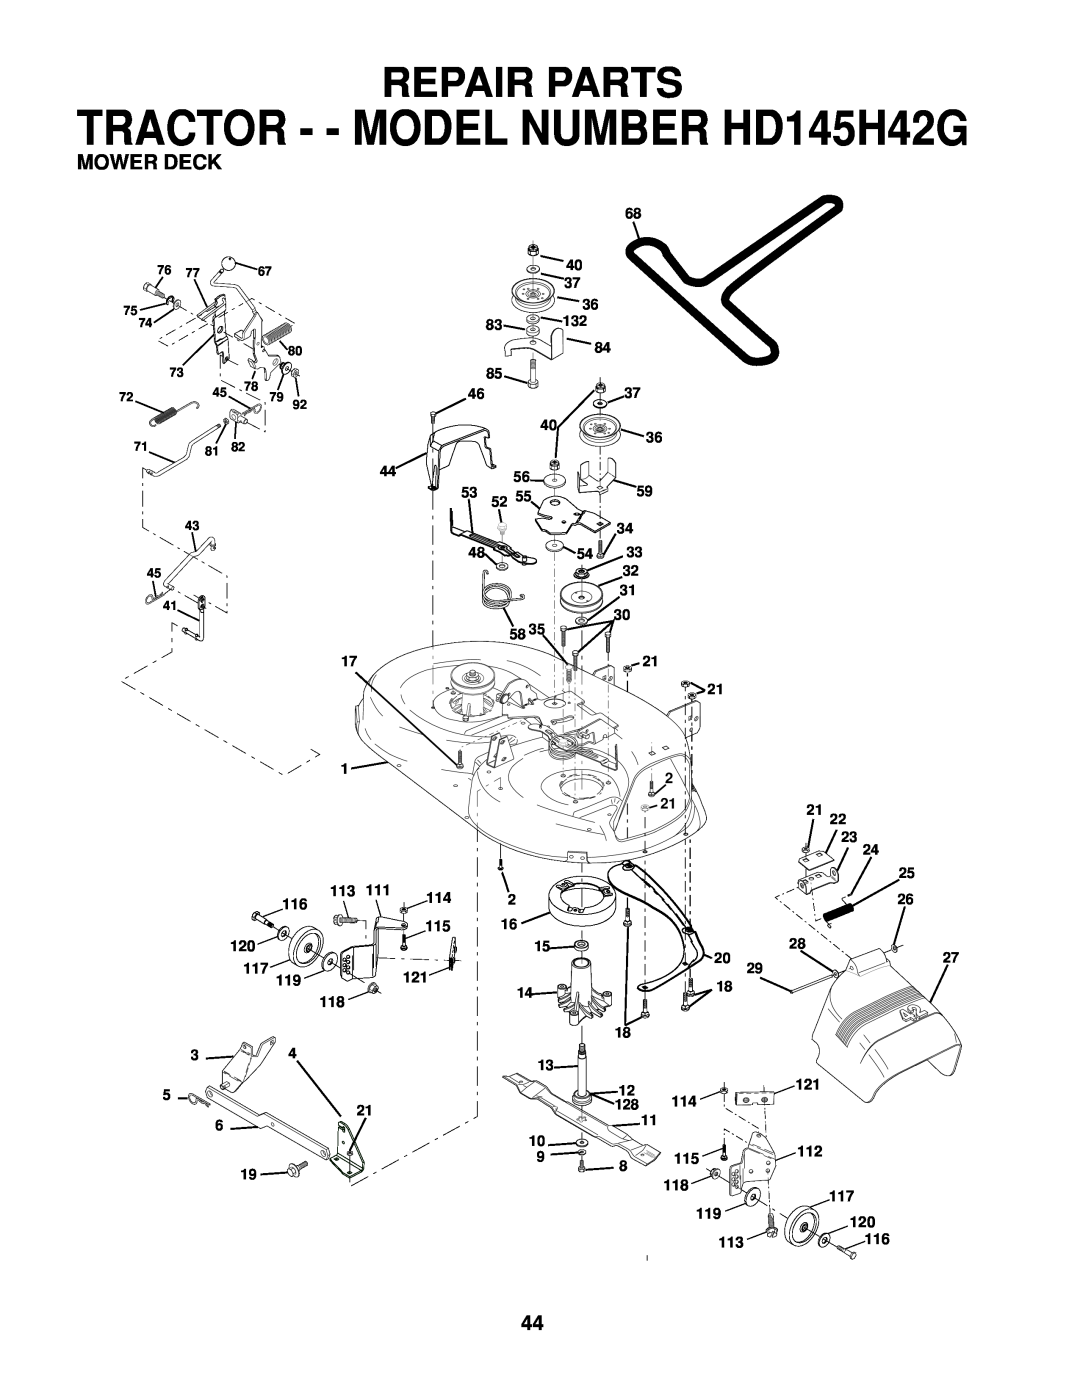 Poulan 161608 owner manual TRACTOR - - MODEL NUMBER HD145H42G, Repair Parts, Mower Deck, 116, 118 119 113, 121 112 